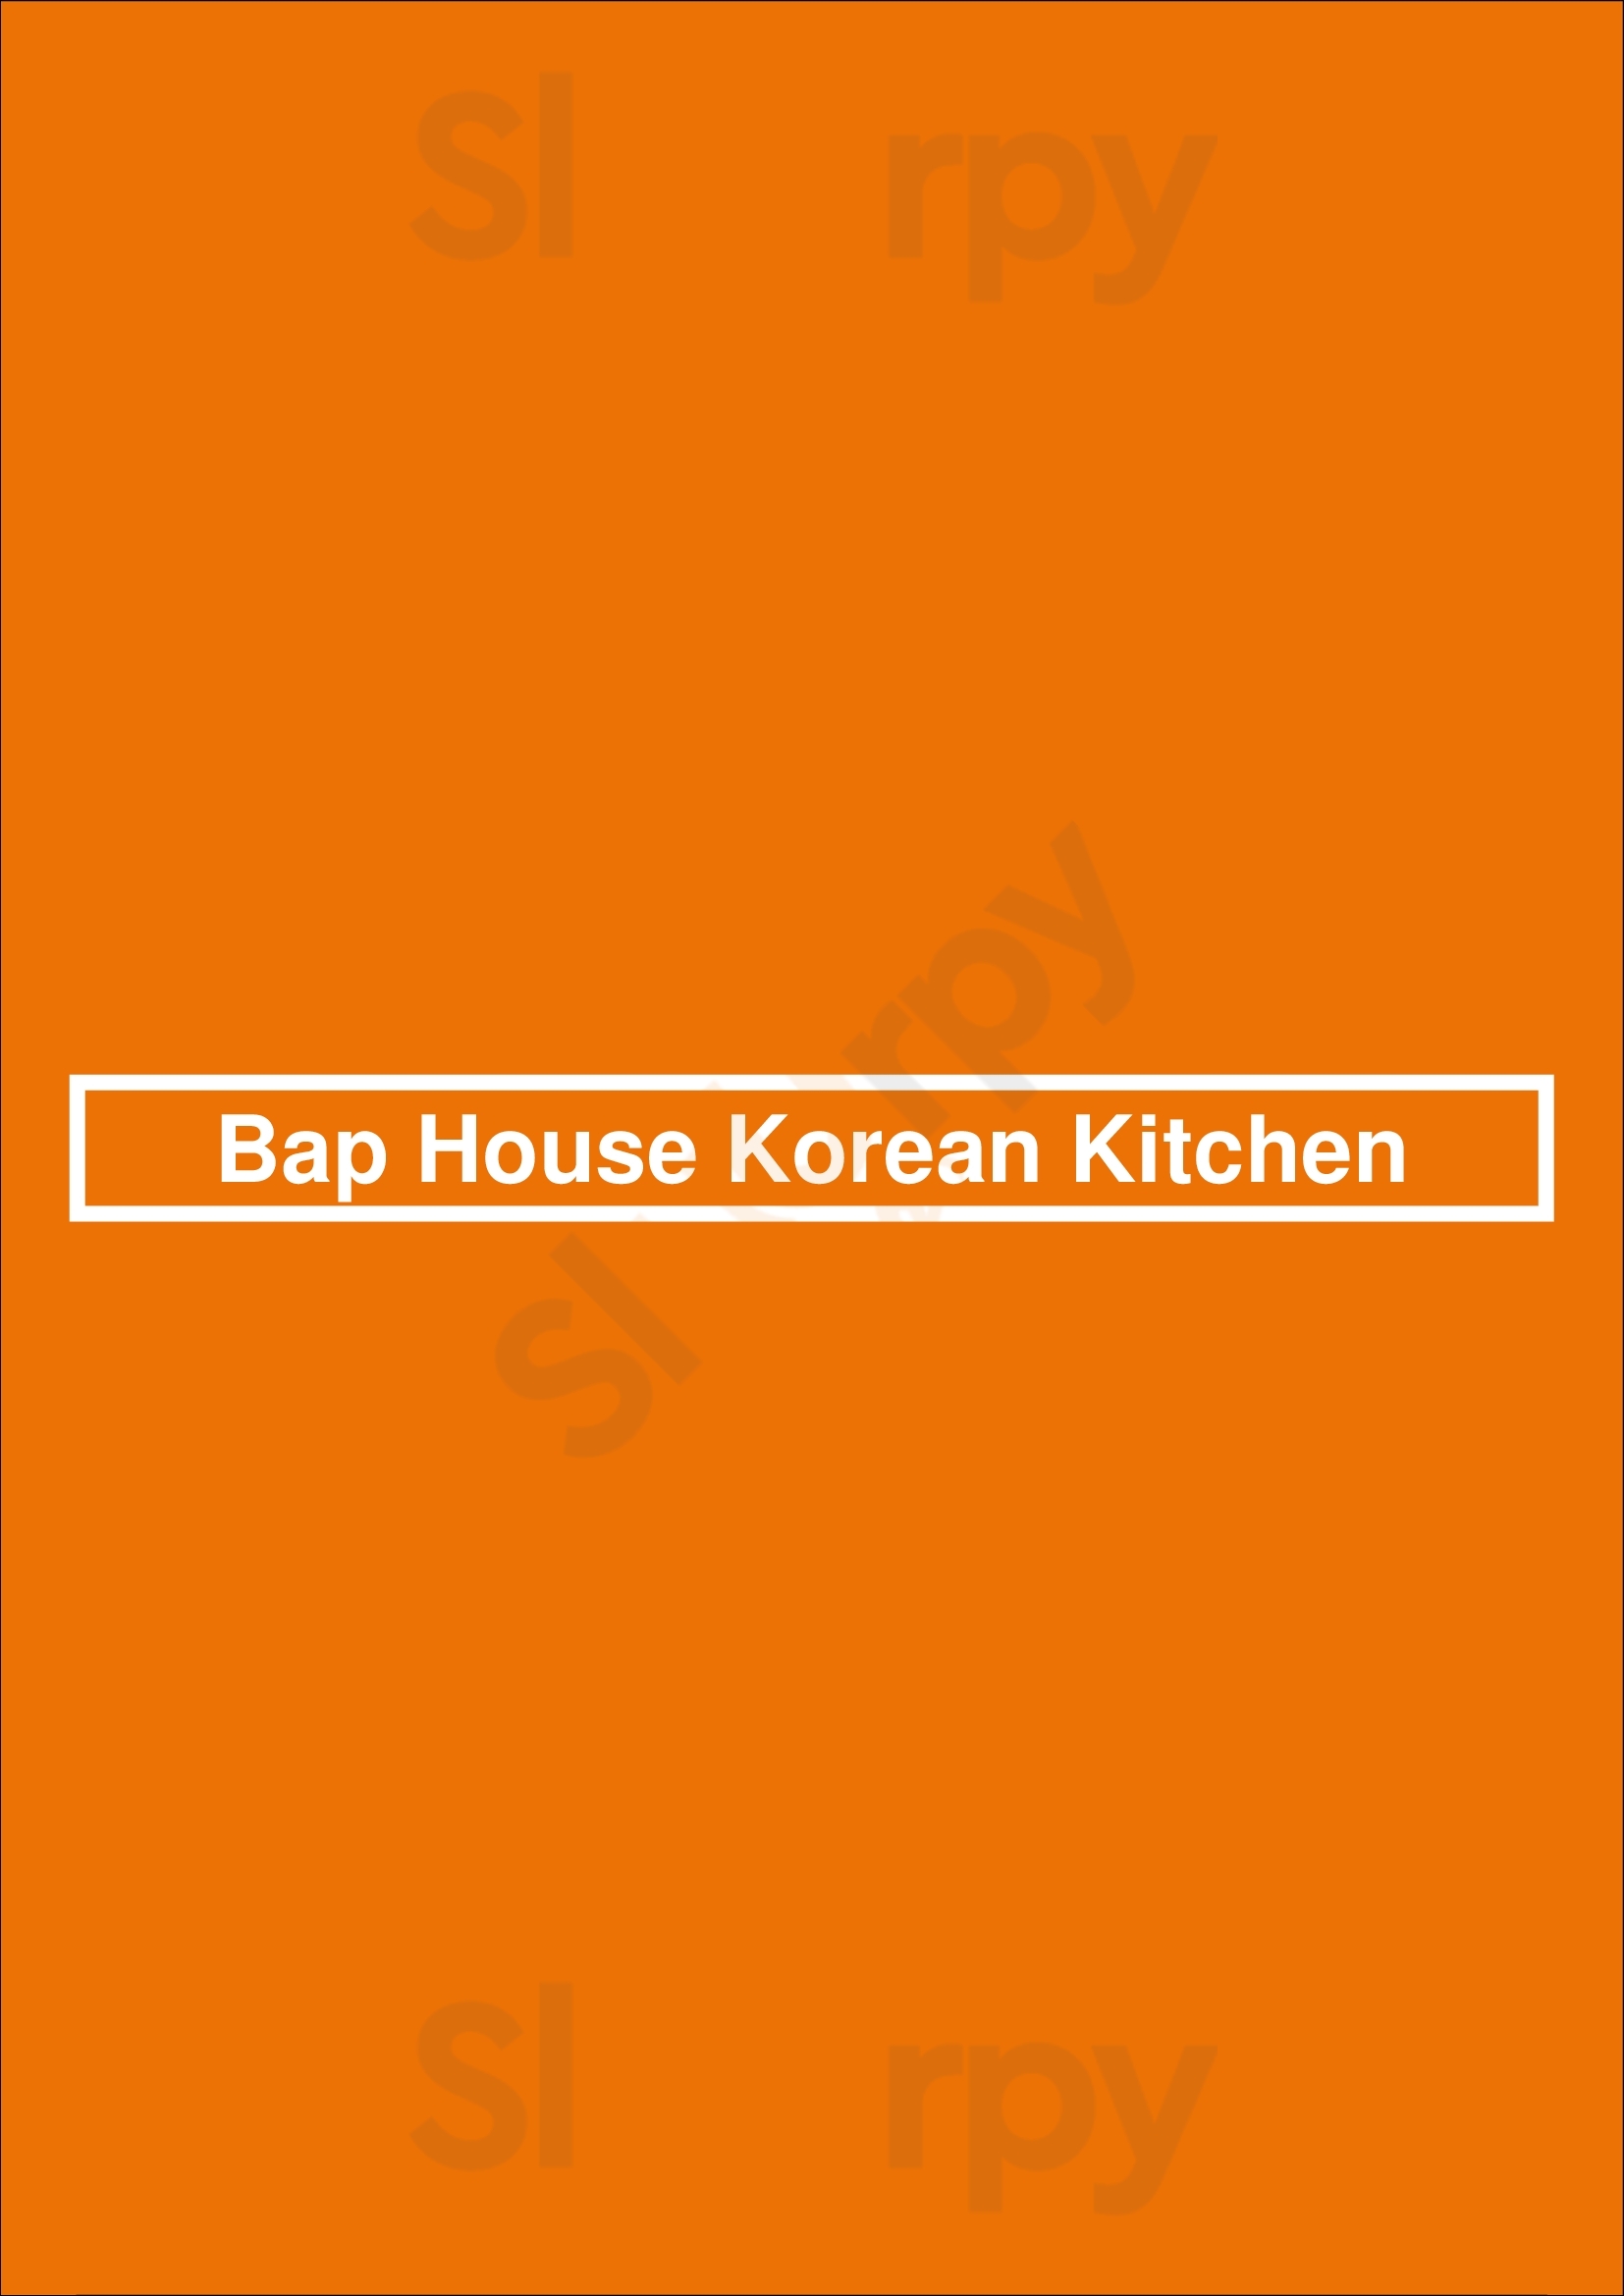 Bap House Korean Kitchen Halifax Menu - 1